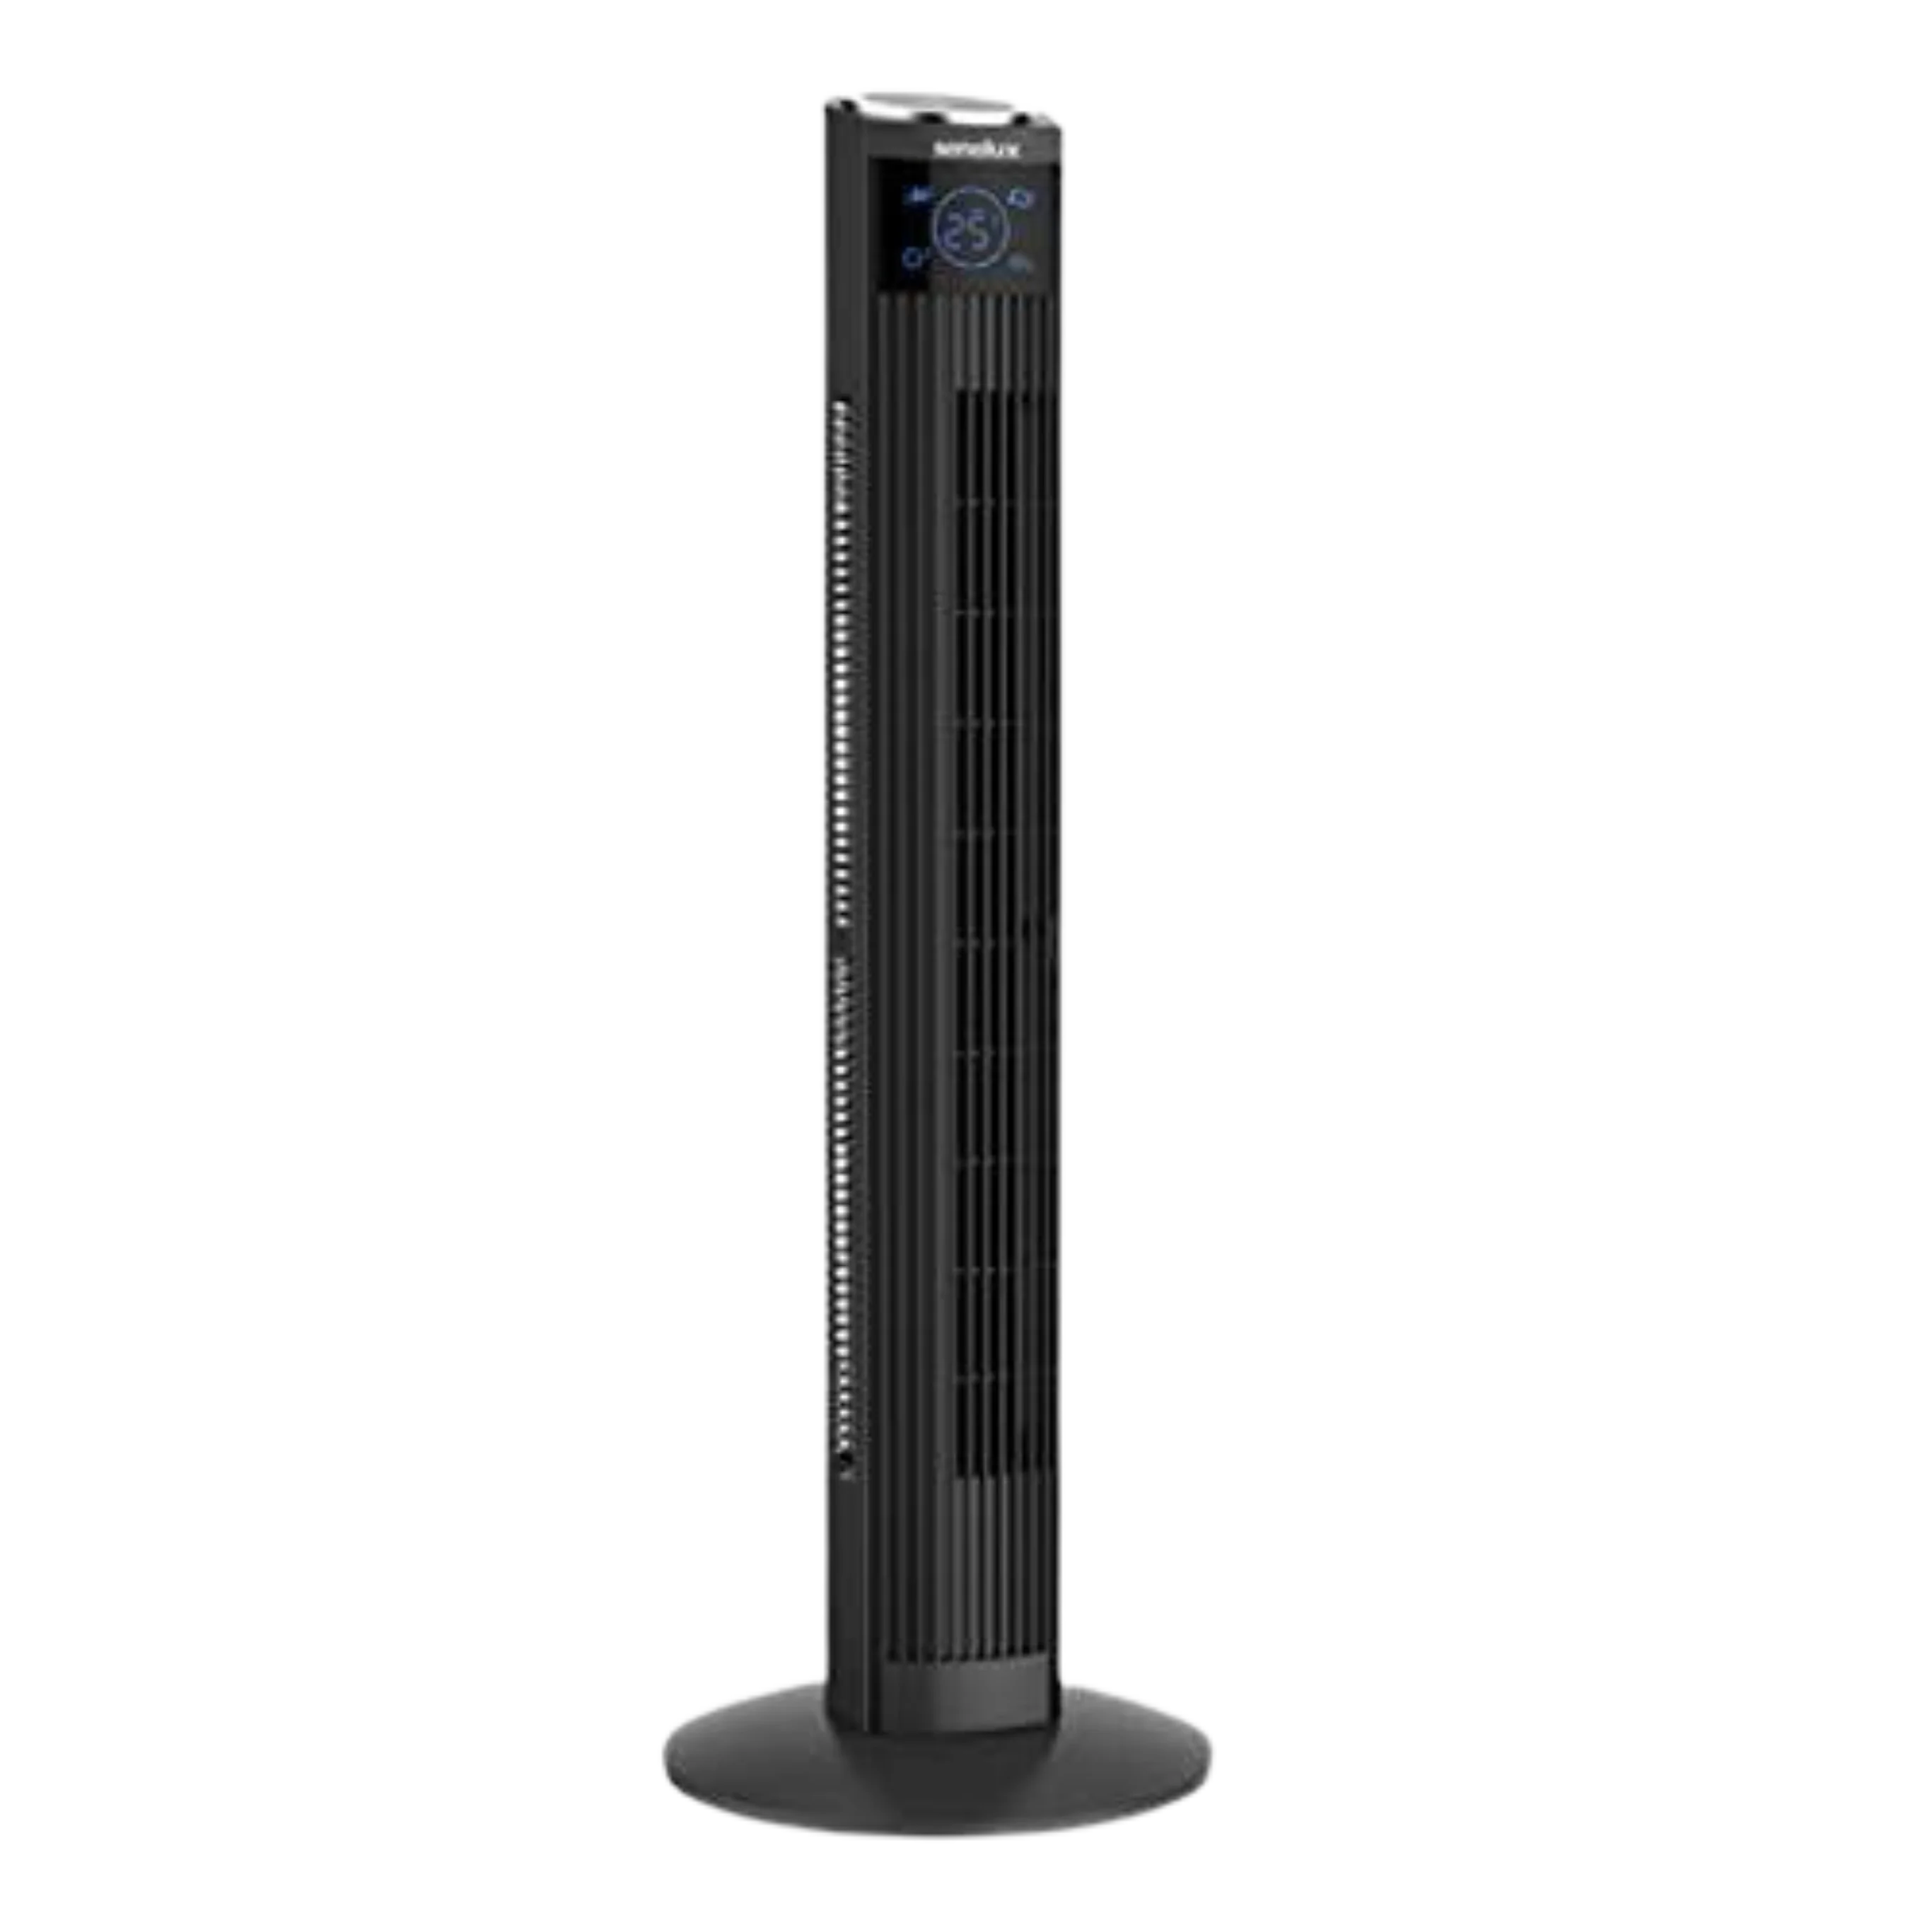 Senelux 36" Oscillating Tower Fan (Refurbished)